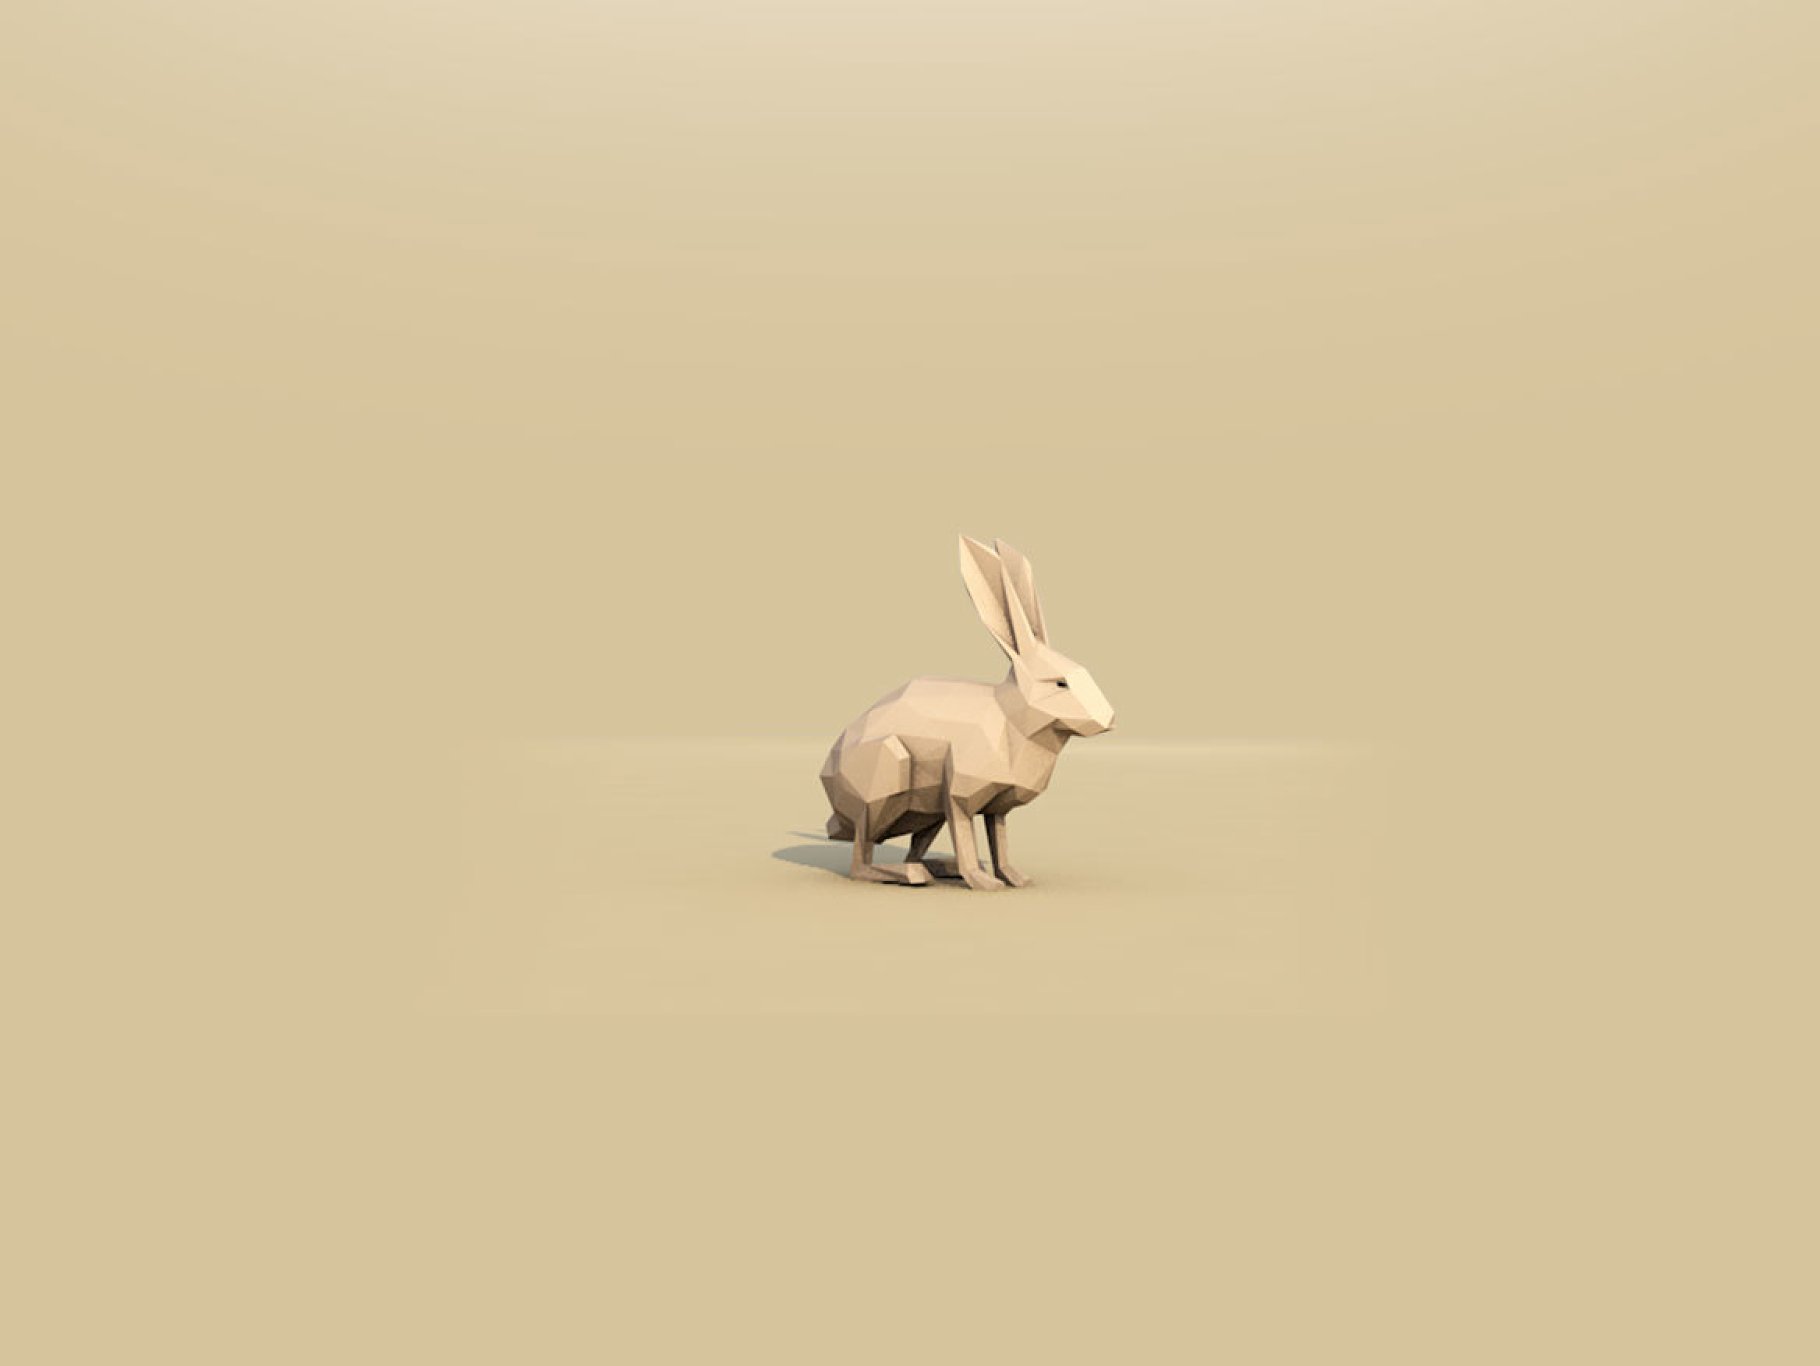 Rabbit front mockup on a beige background.